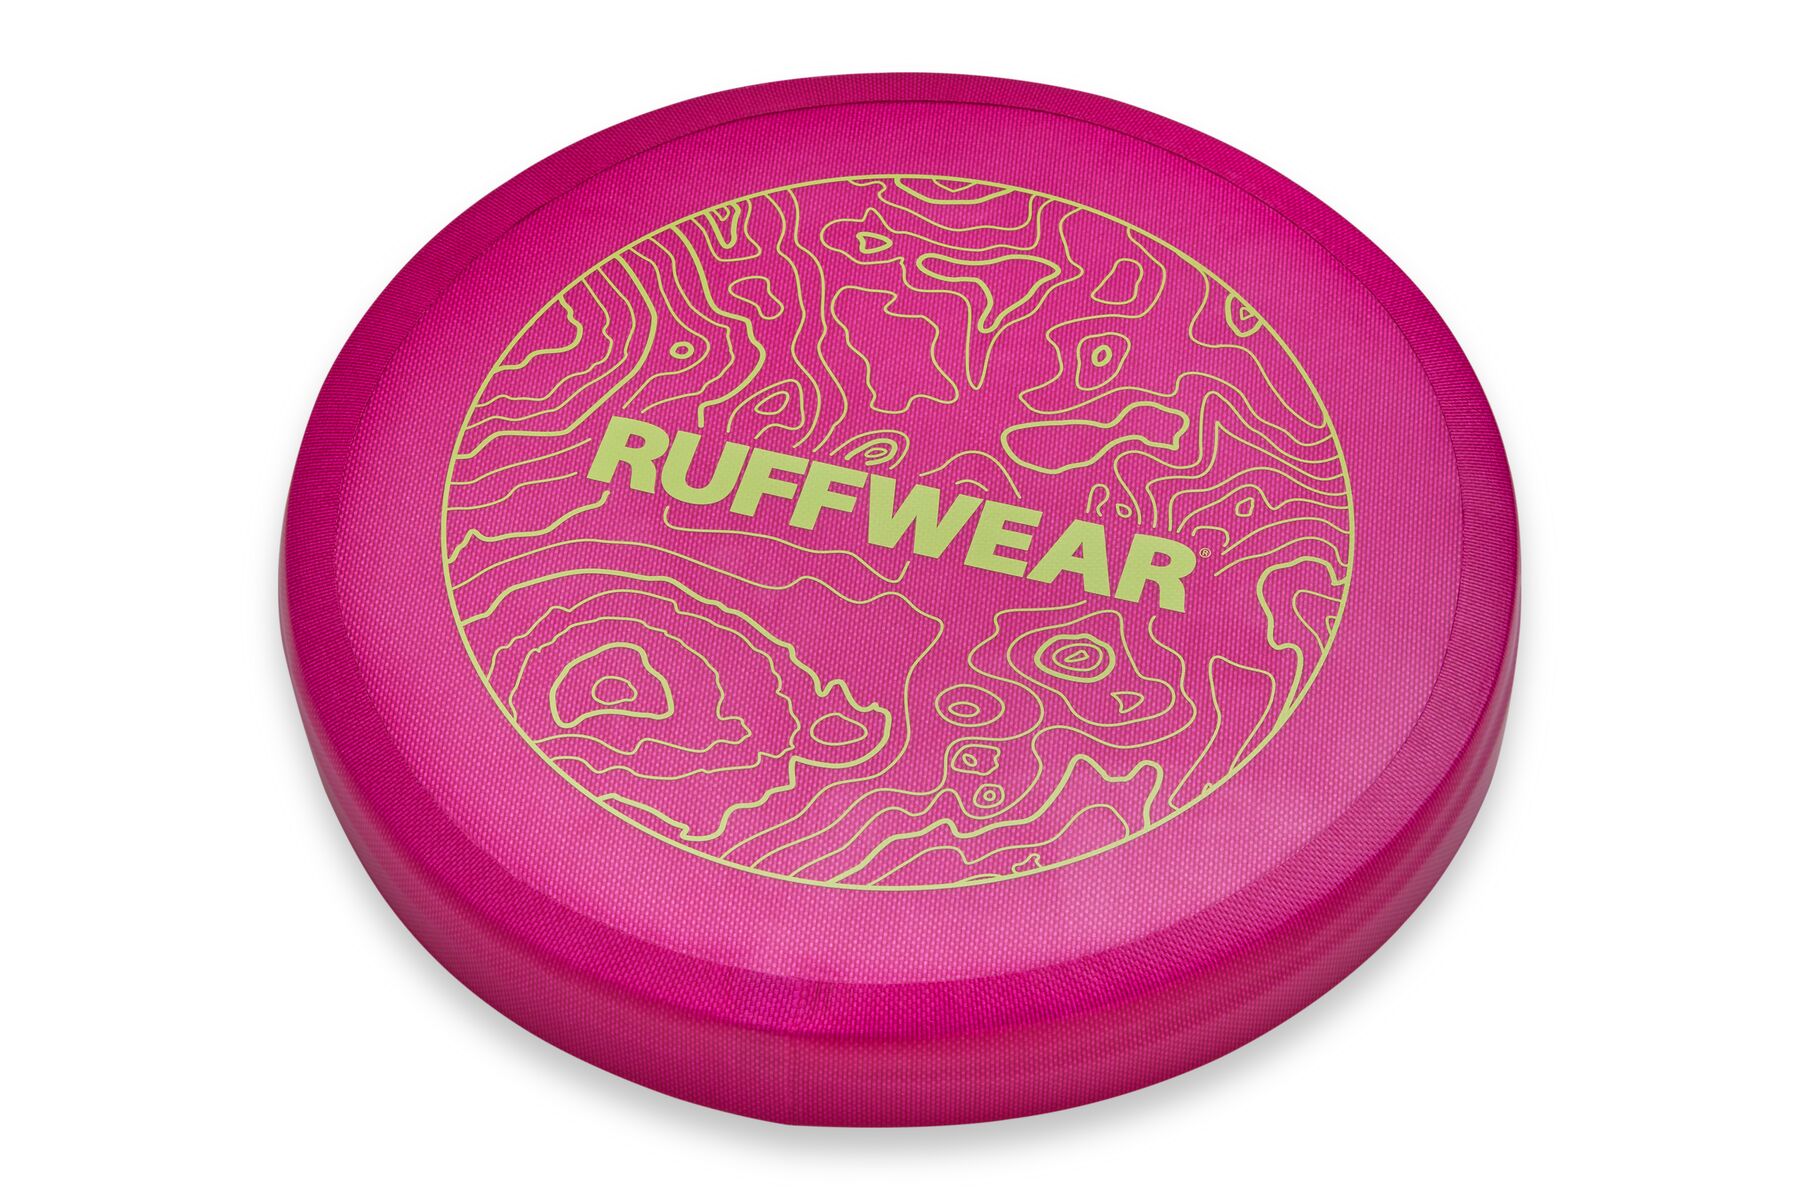 Camp Flyer Pitaya Pink Frisbee - Inne / Ute